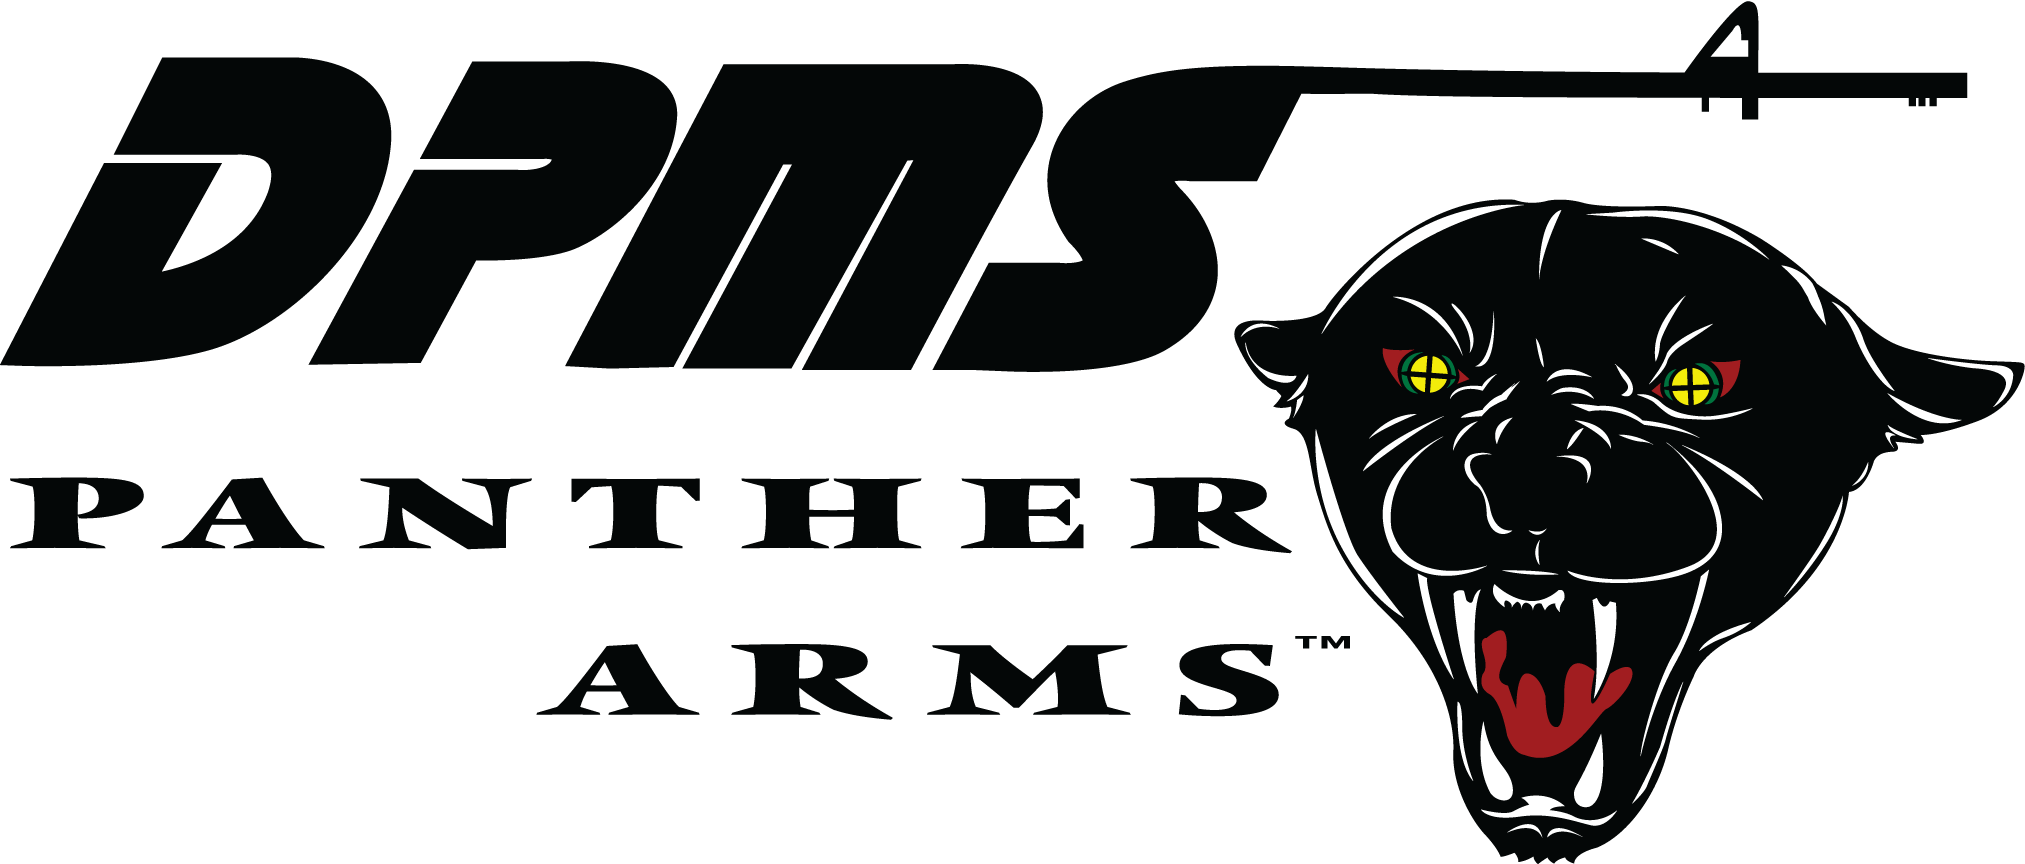 DPMS Logo